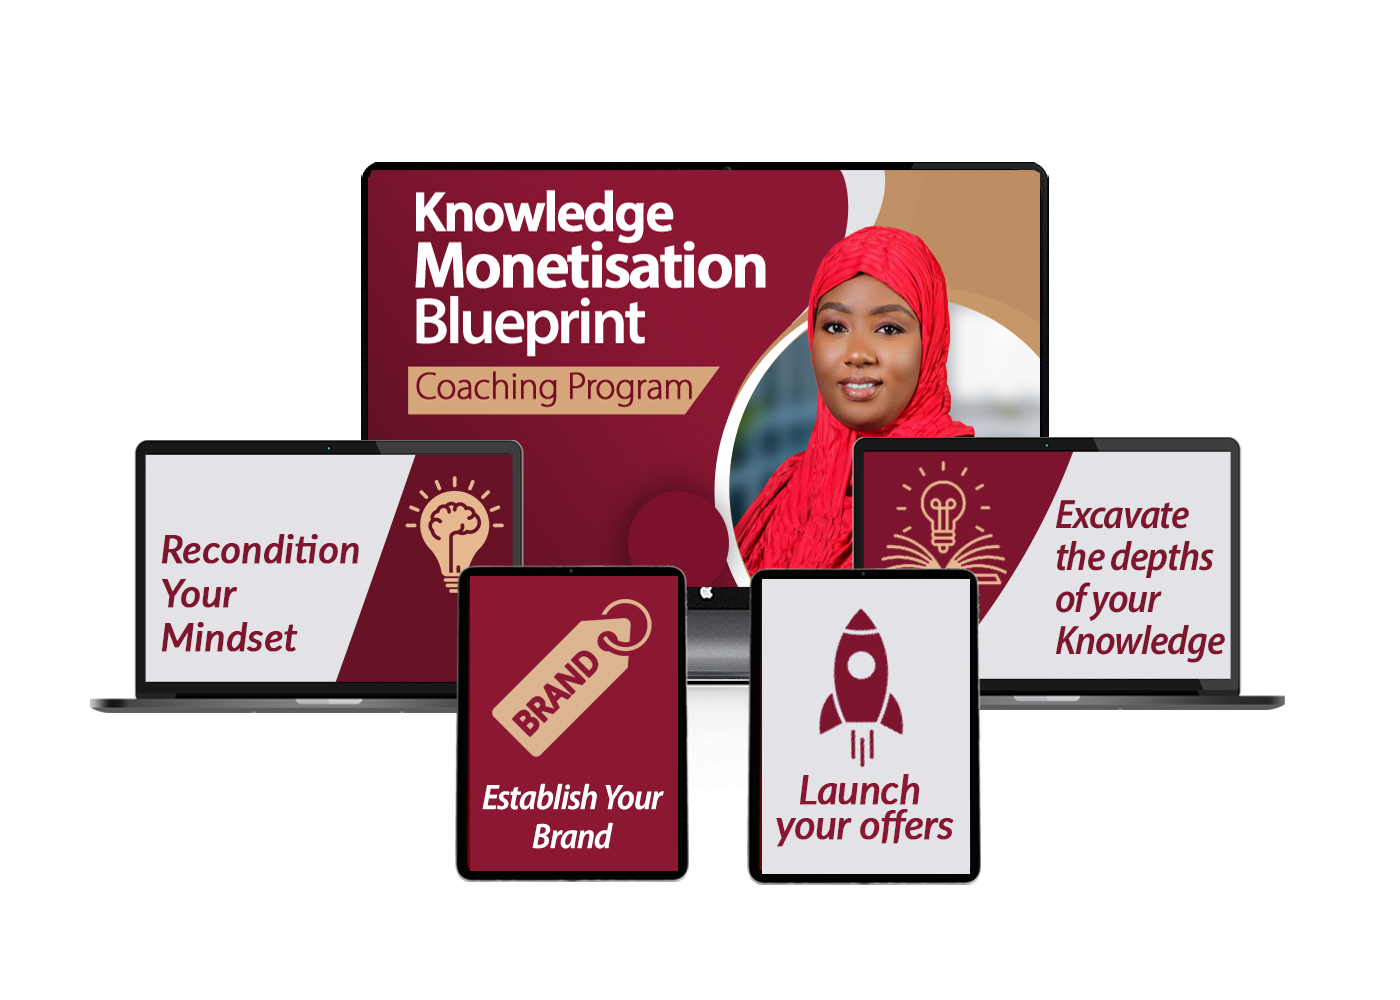 The Knowledge Monetisation Blueprint